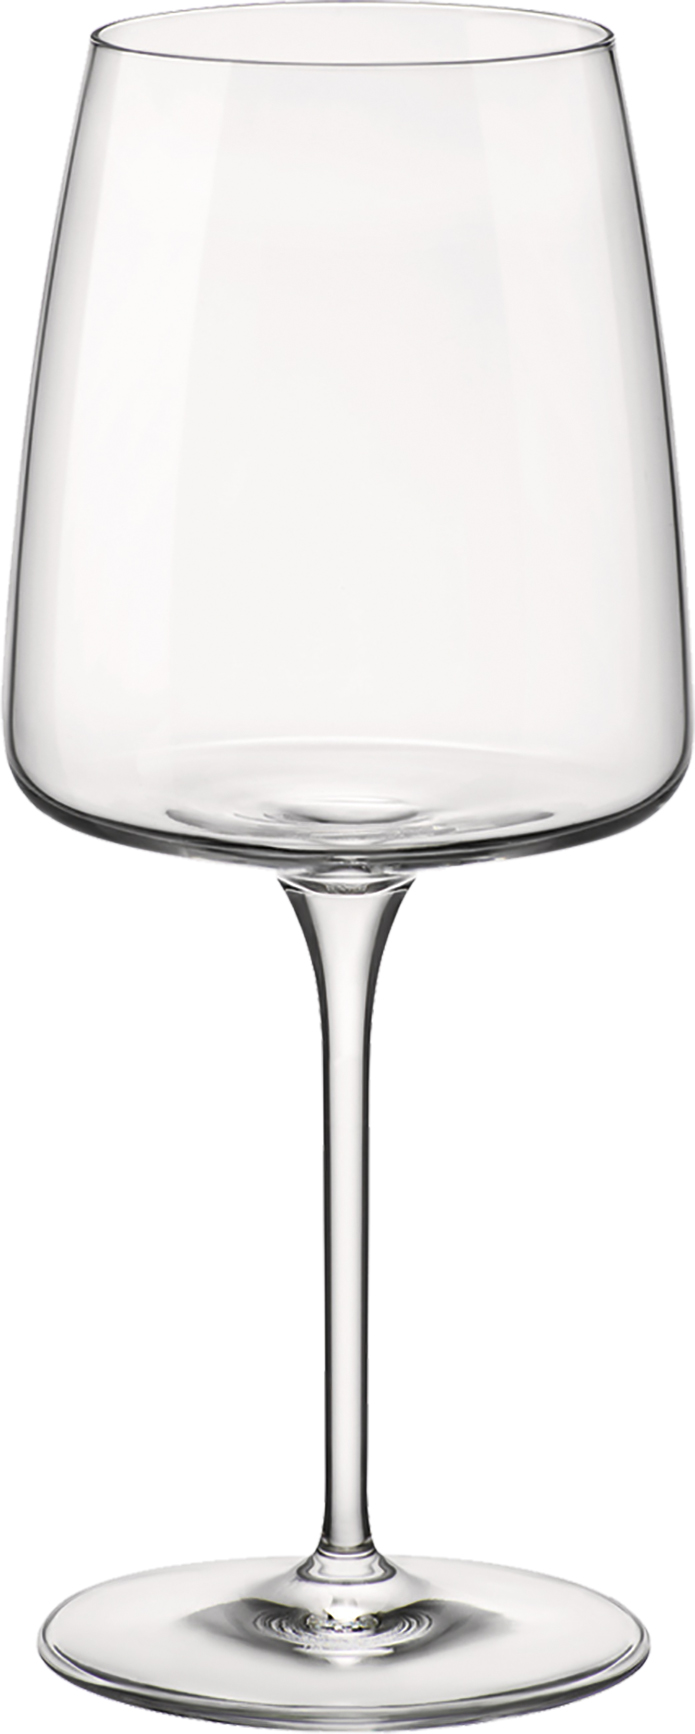 Bormioli Rocco Nexo Weinkelch, 450ml, Kristallglas, transparent, 6 Stück